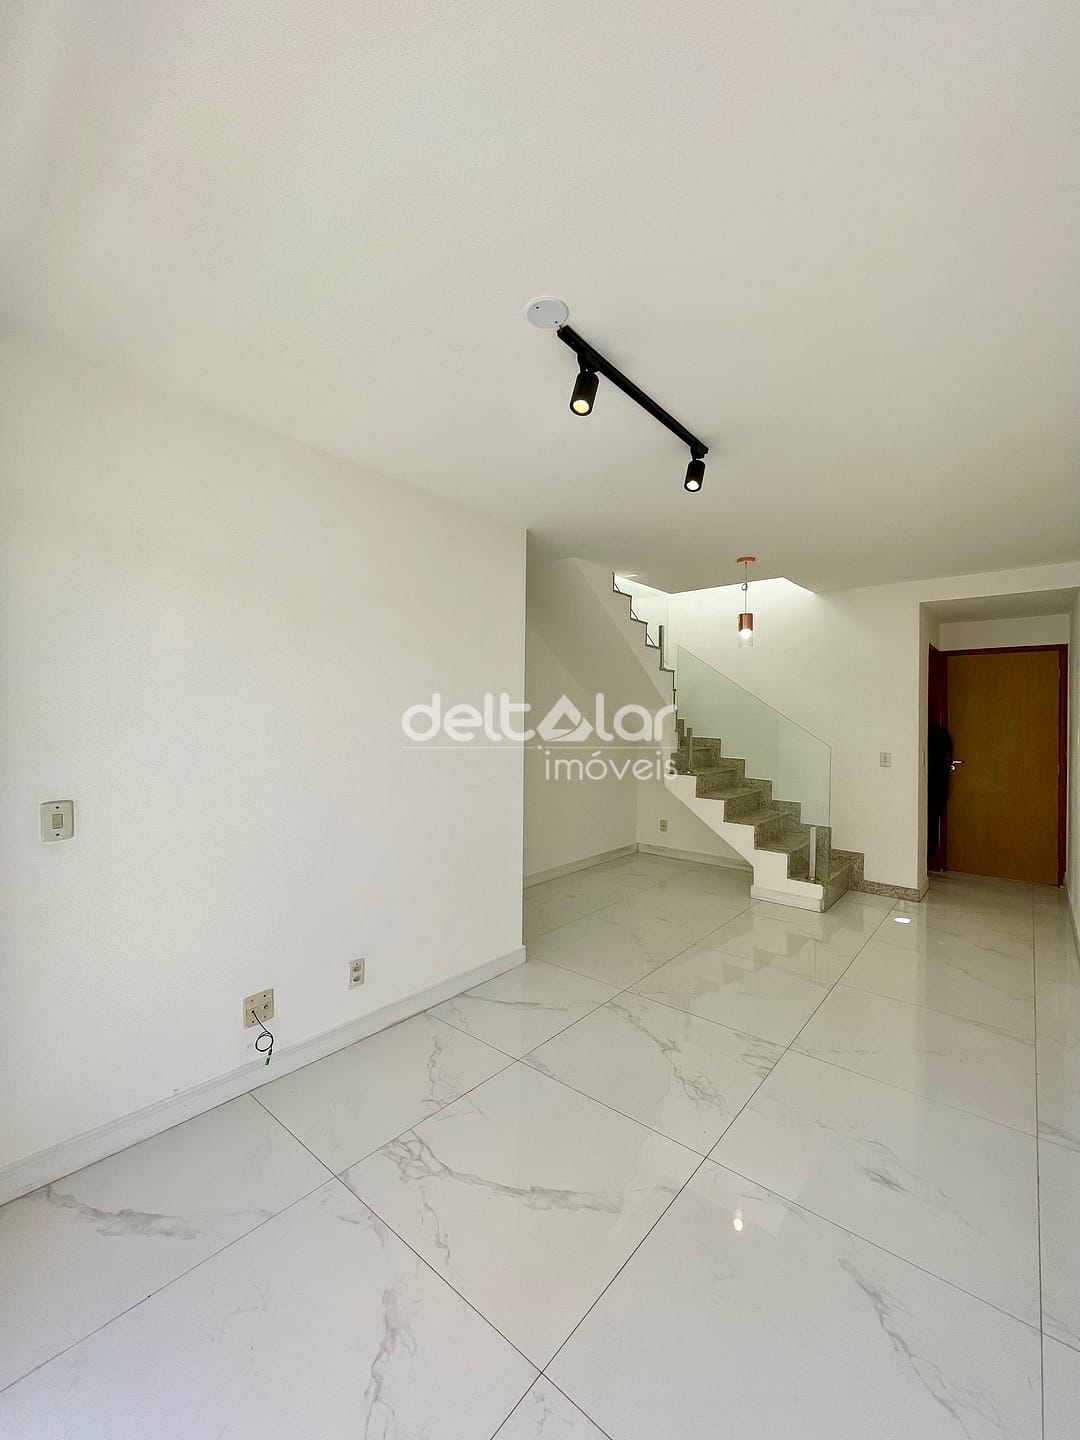 Cobertura, 3 quartos, 150 m² - Foto 4